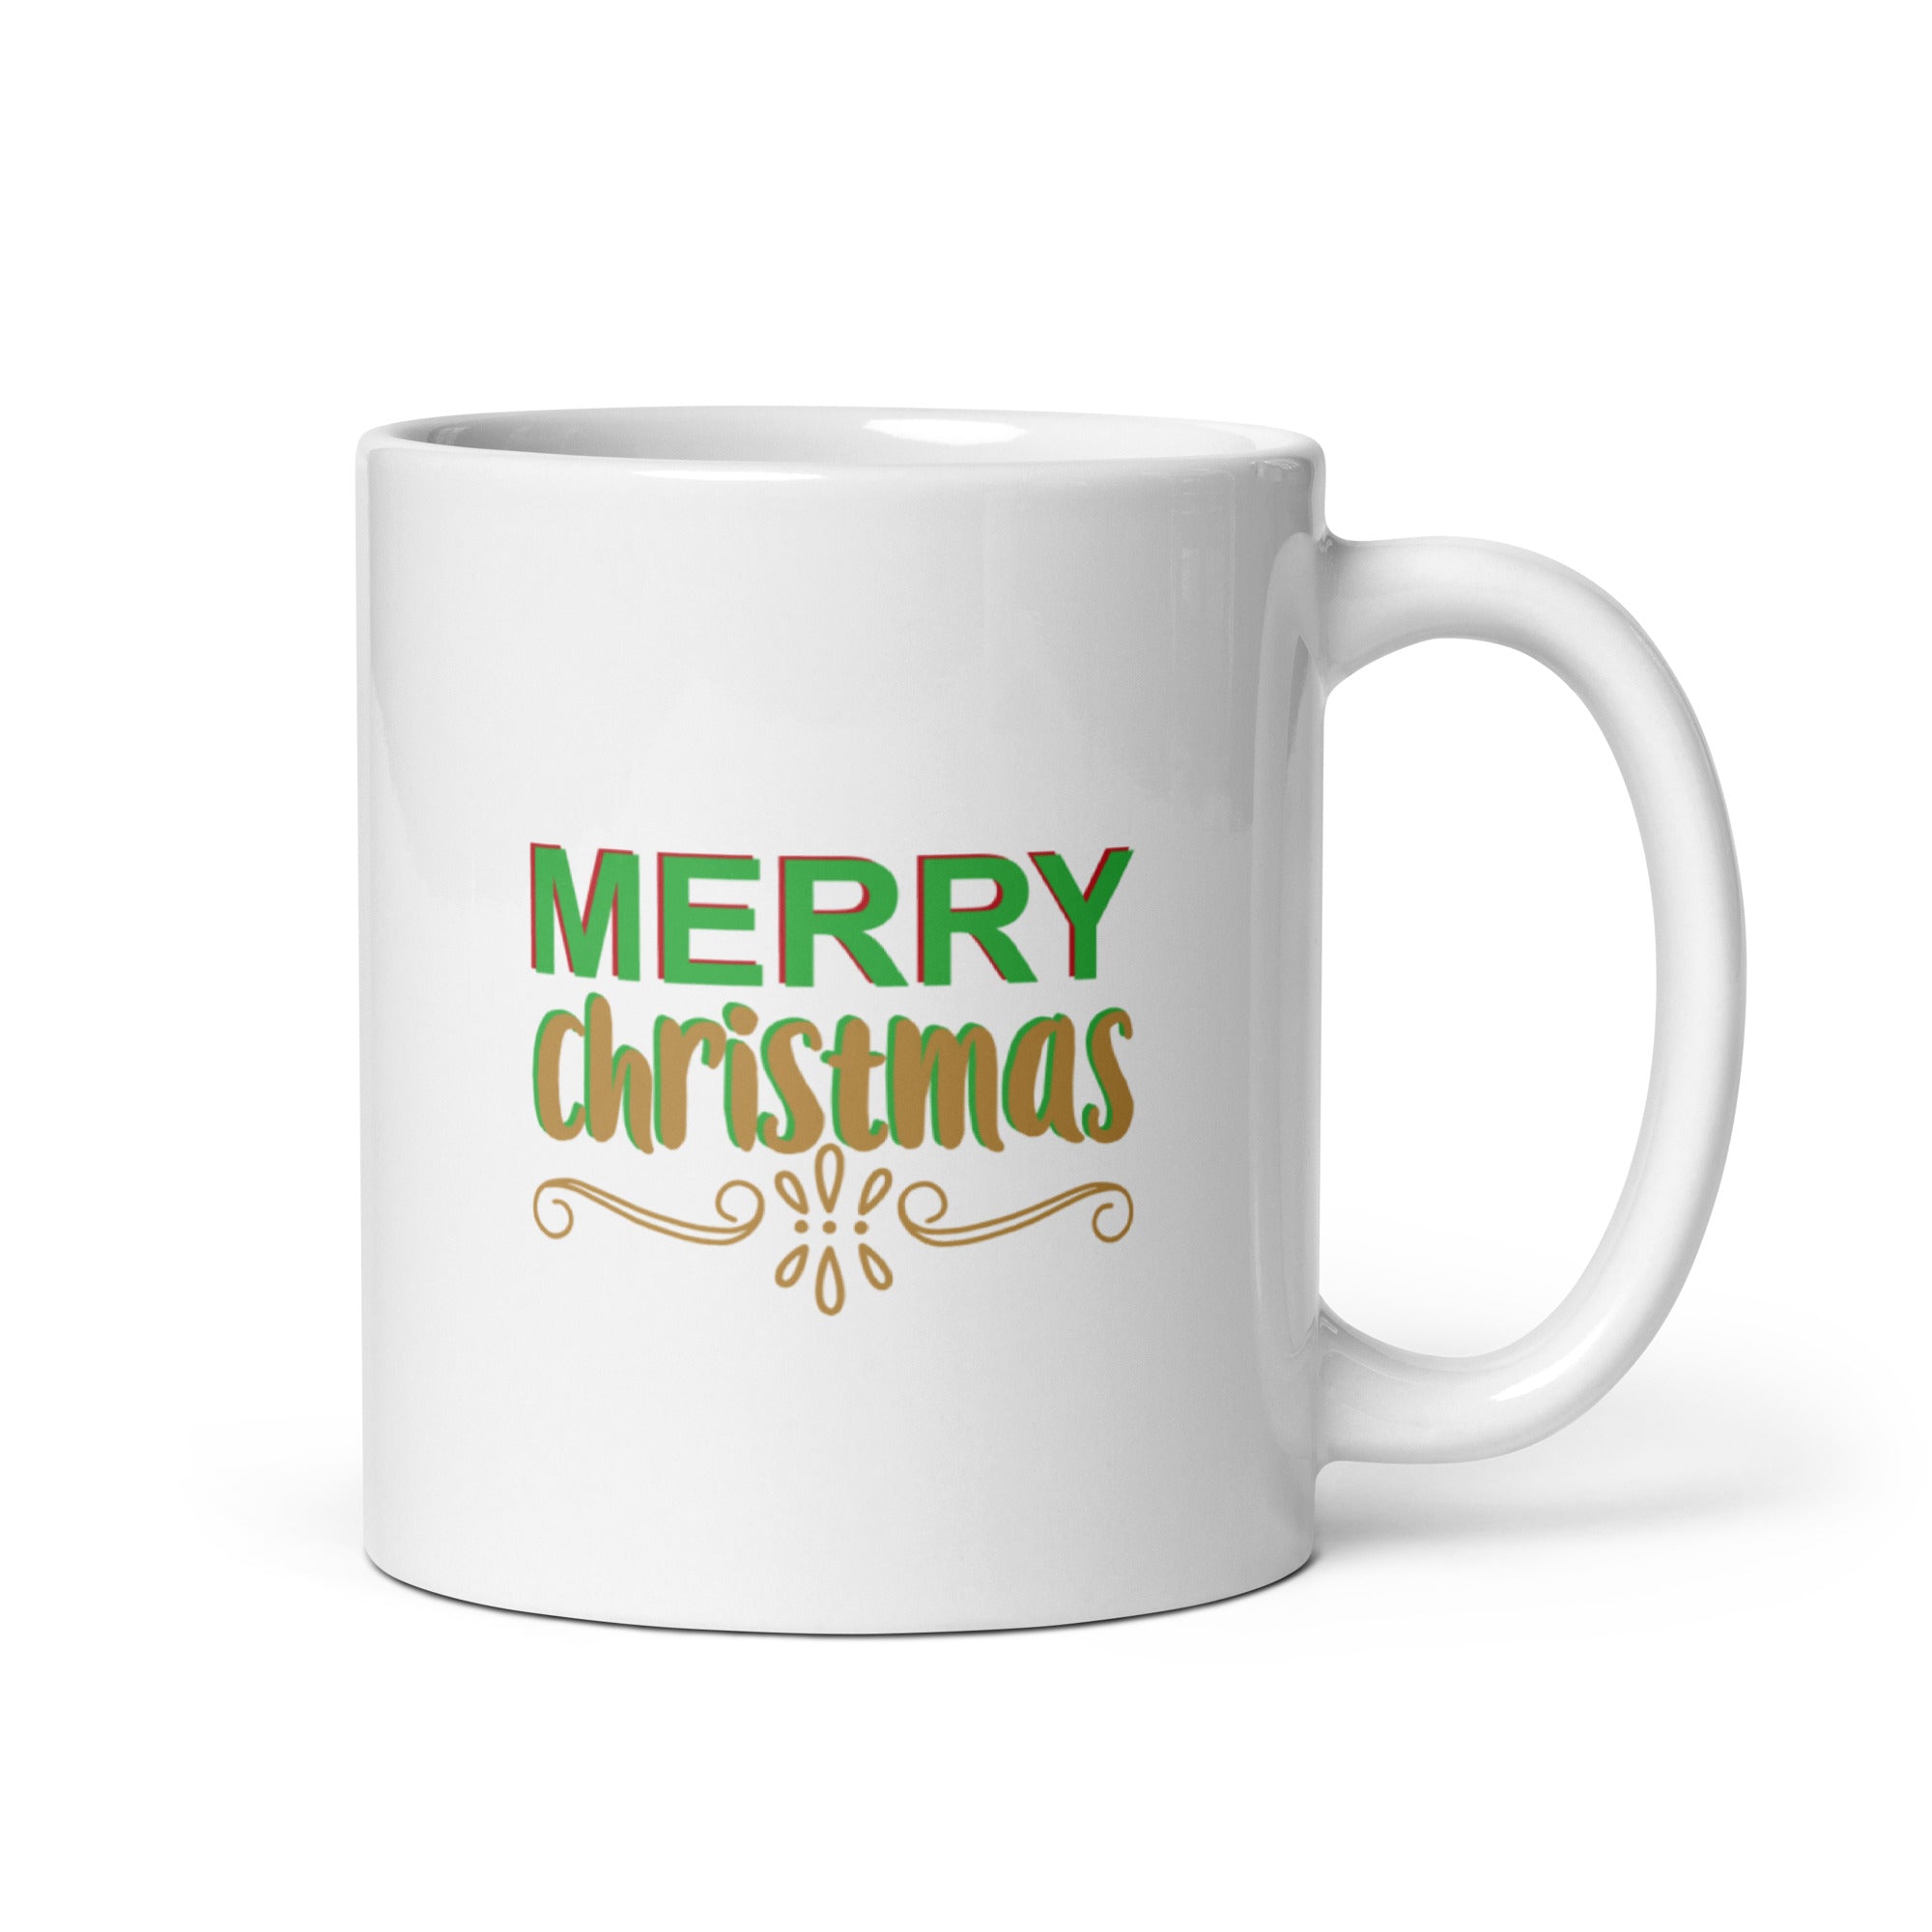 Merry Christmas - White glossy mug